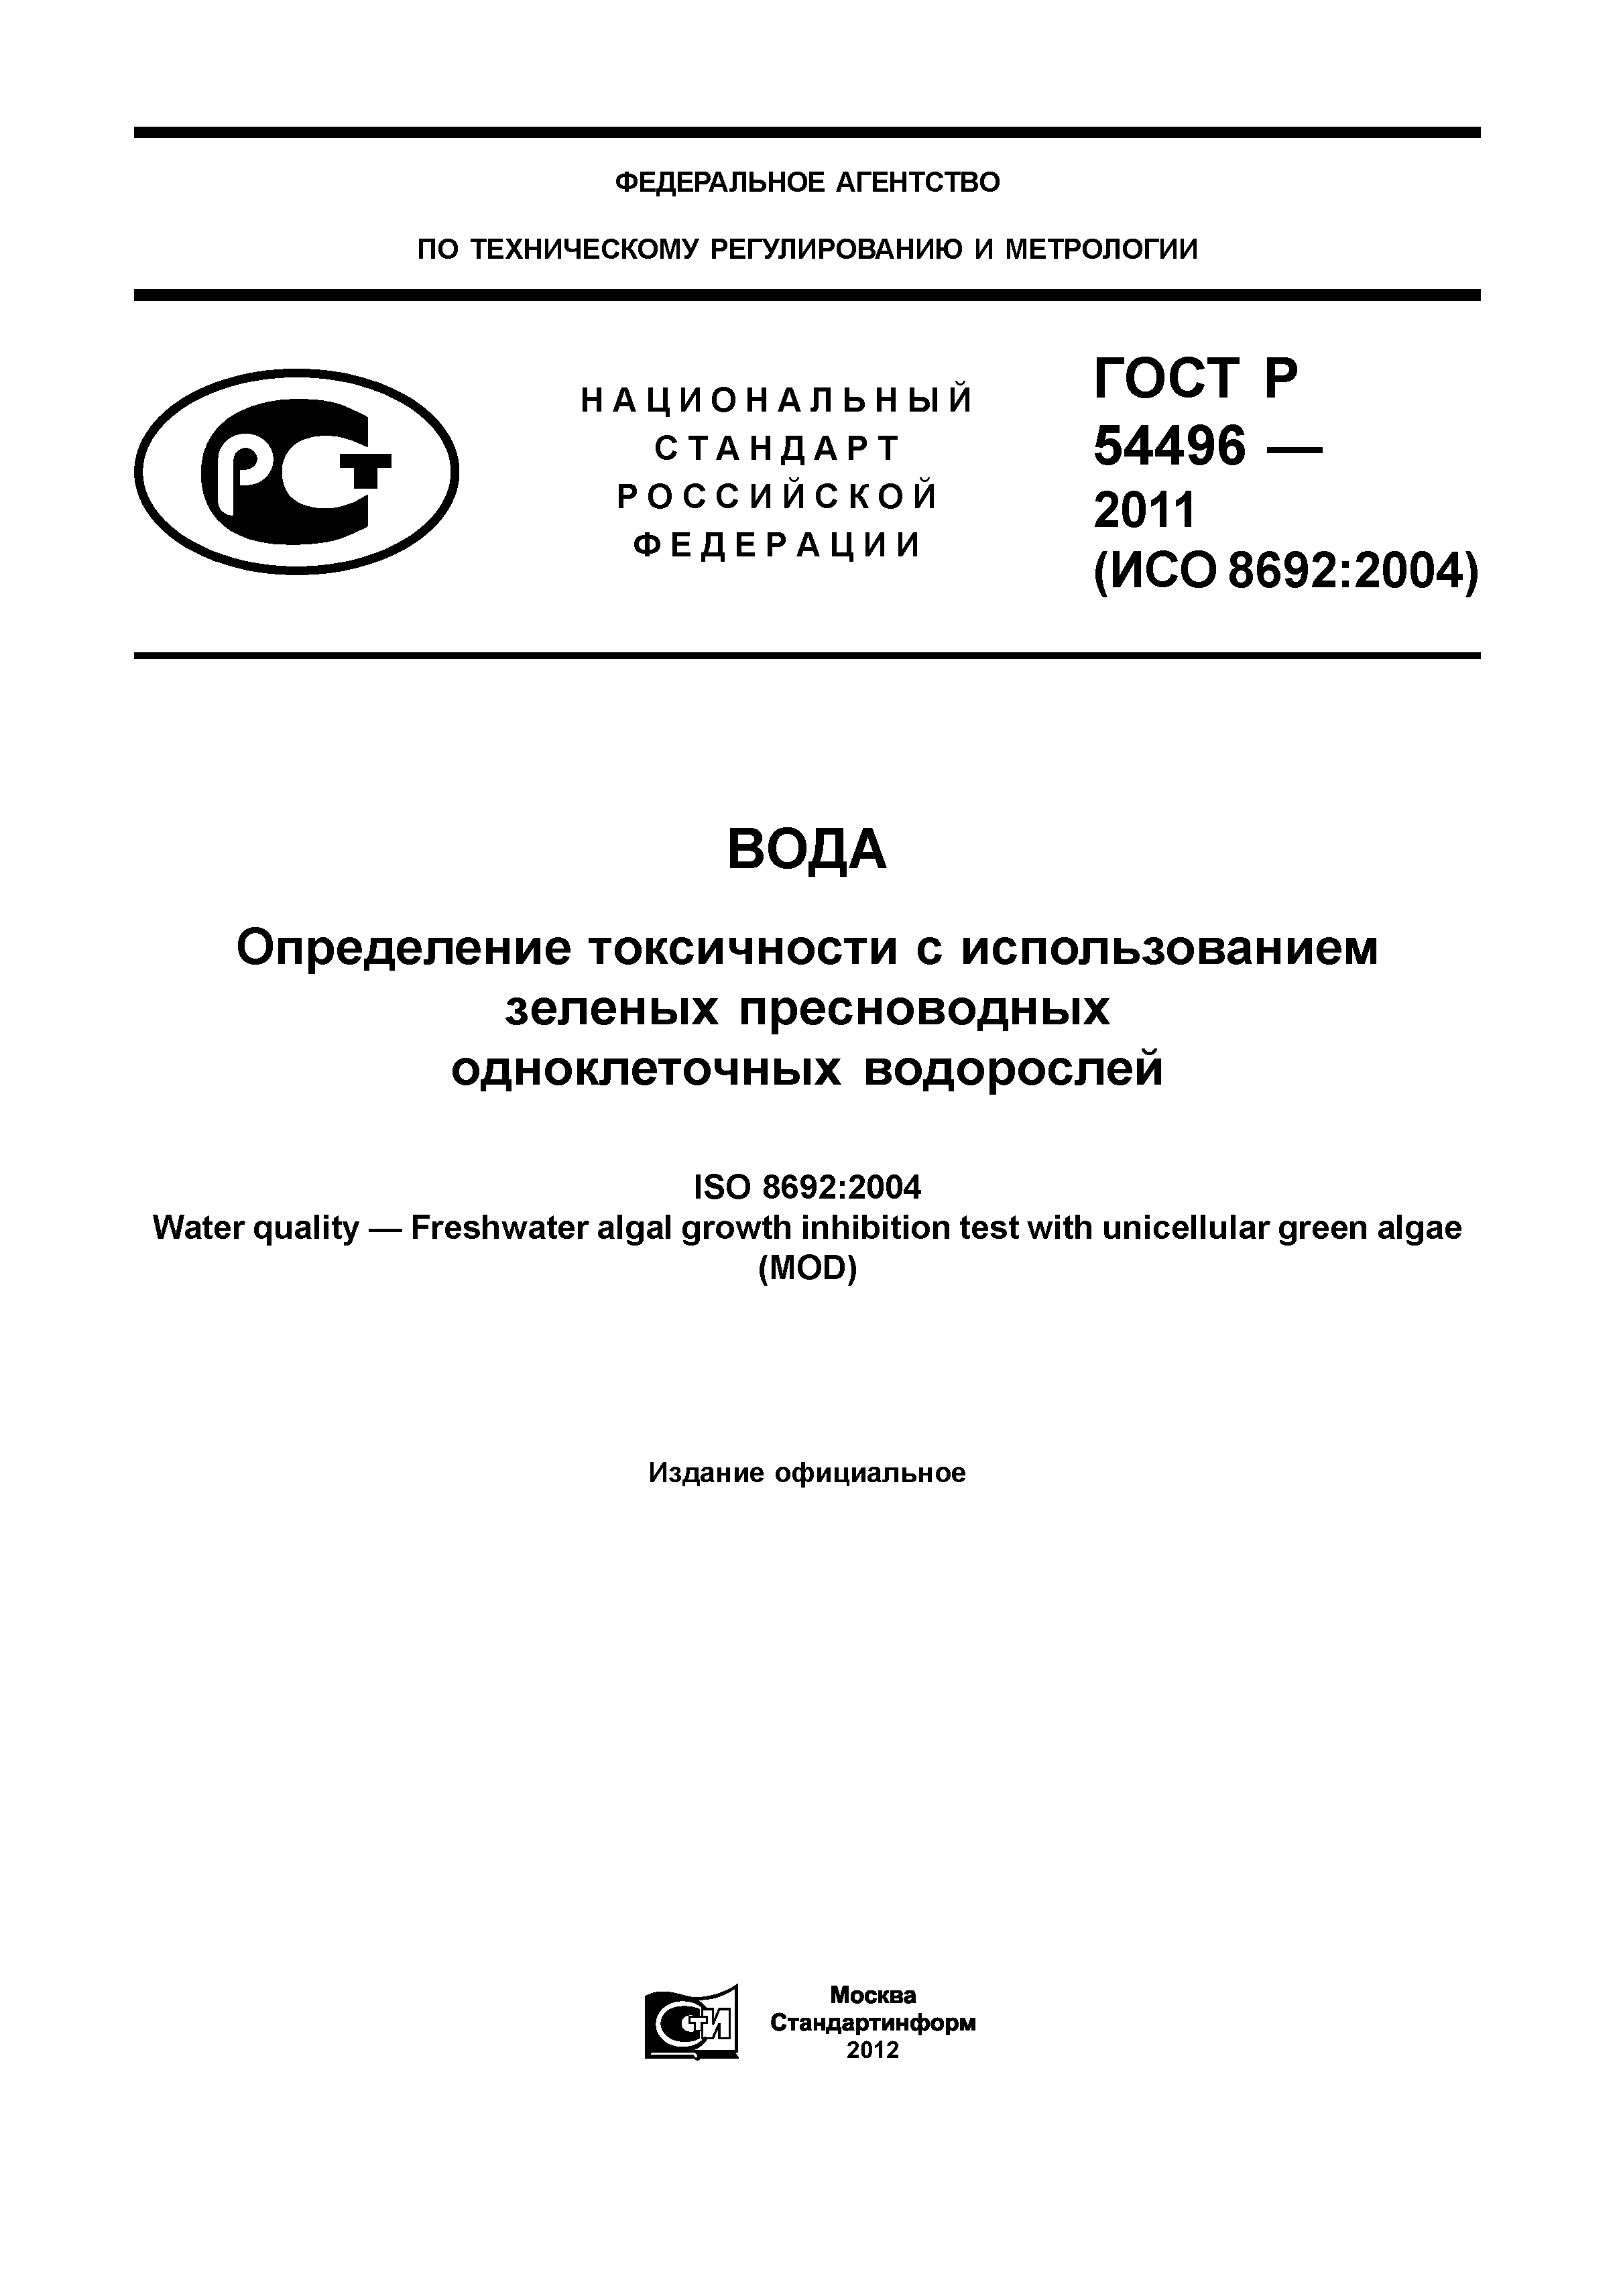 ГОСТ Р 54496-2011